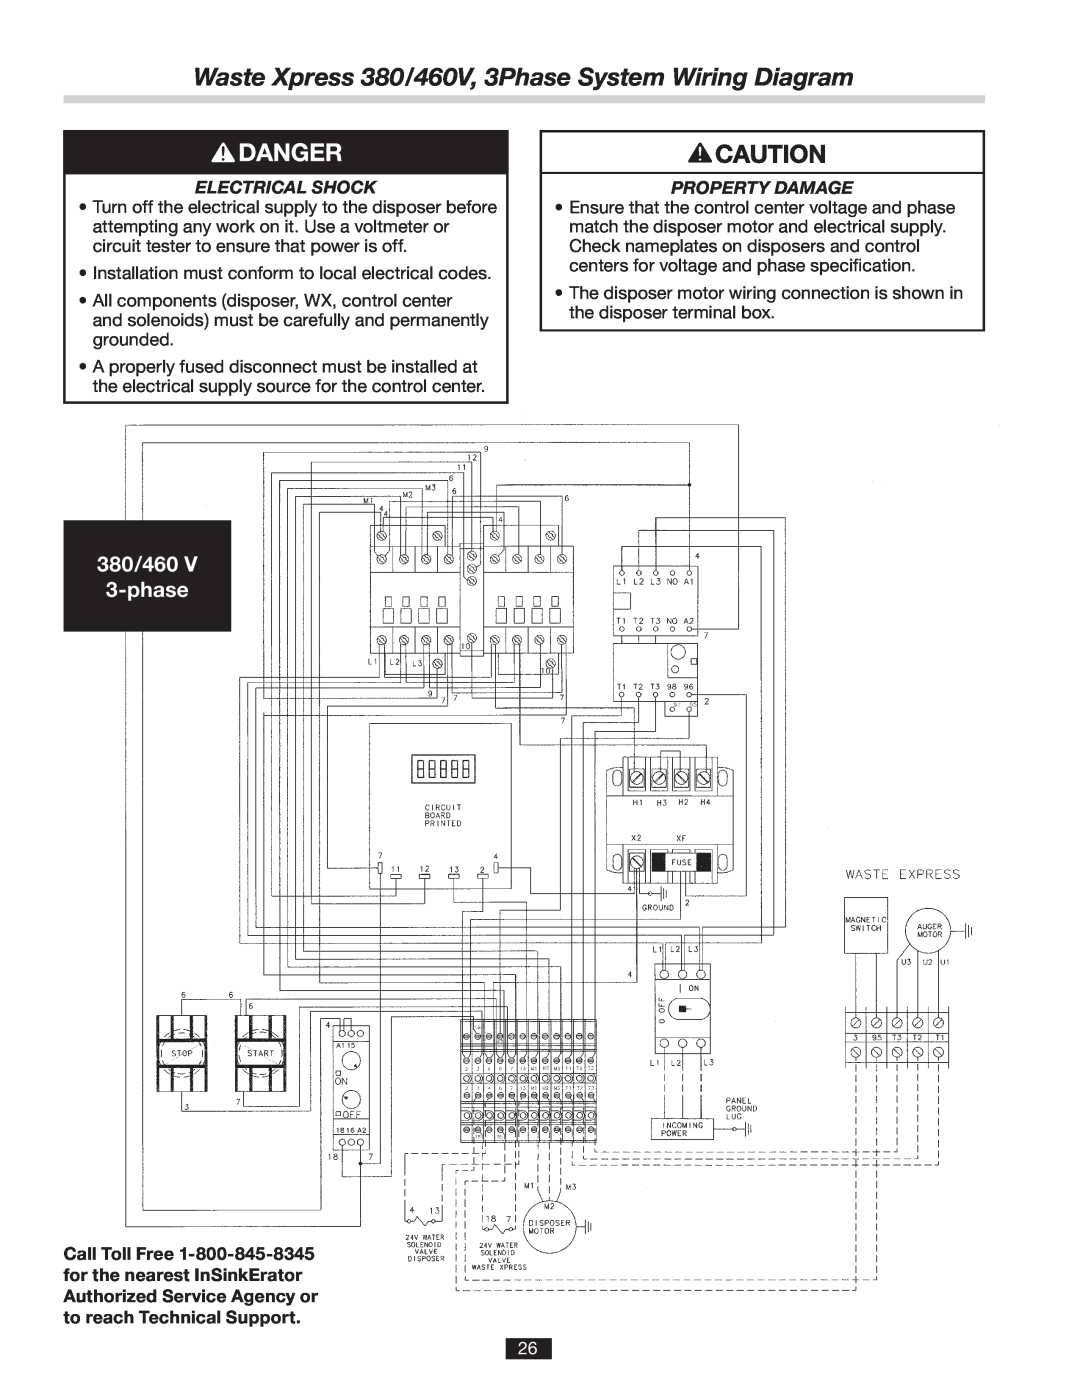 InSinkErator 14481 manual Waste Xpress 380/460V, 3Phase System Wiring Diagram, 120 380/460 1-phase 3-phase 1/2 to 2 HP 